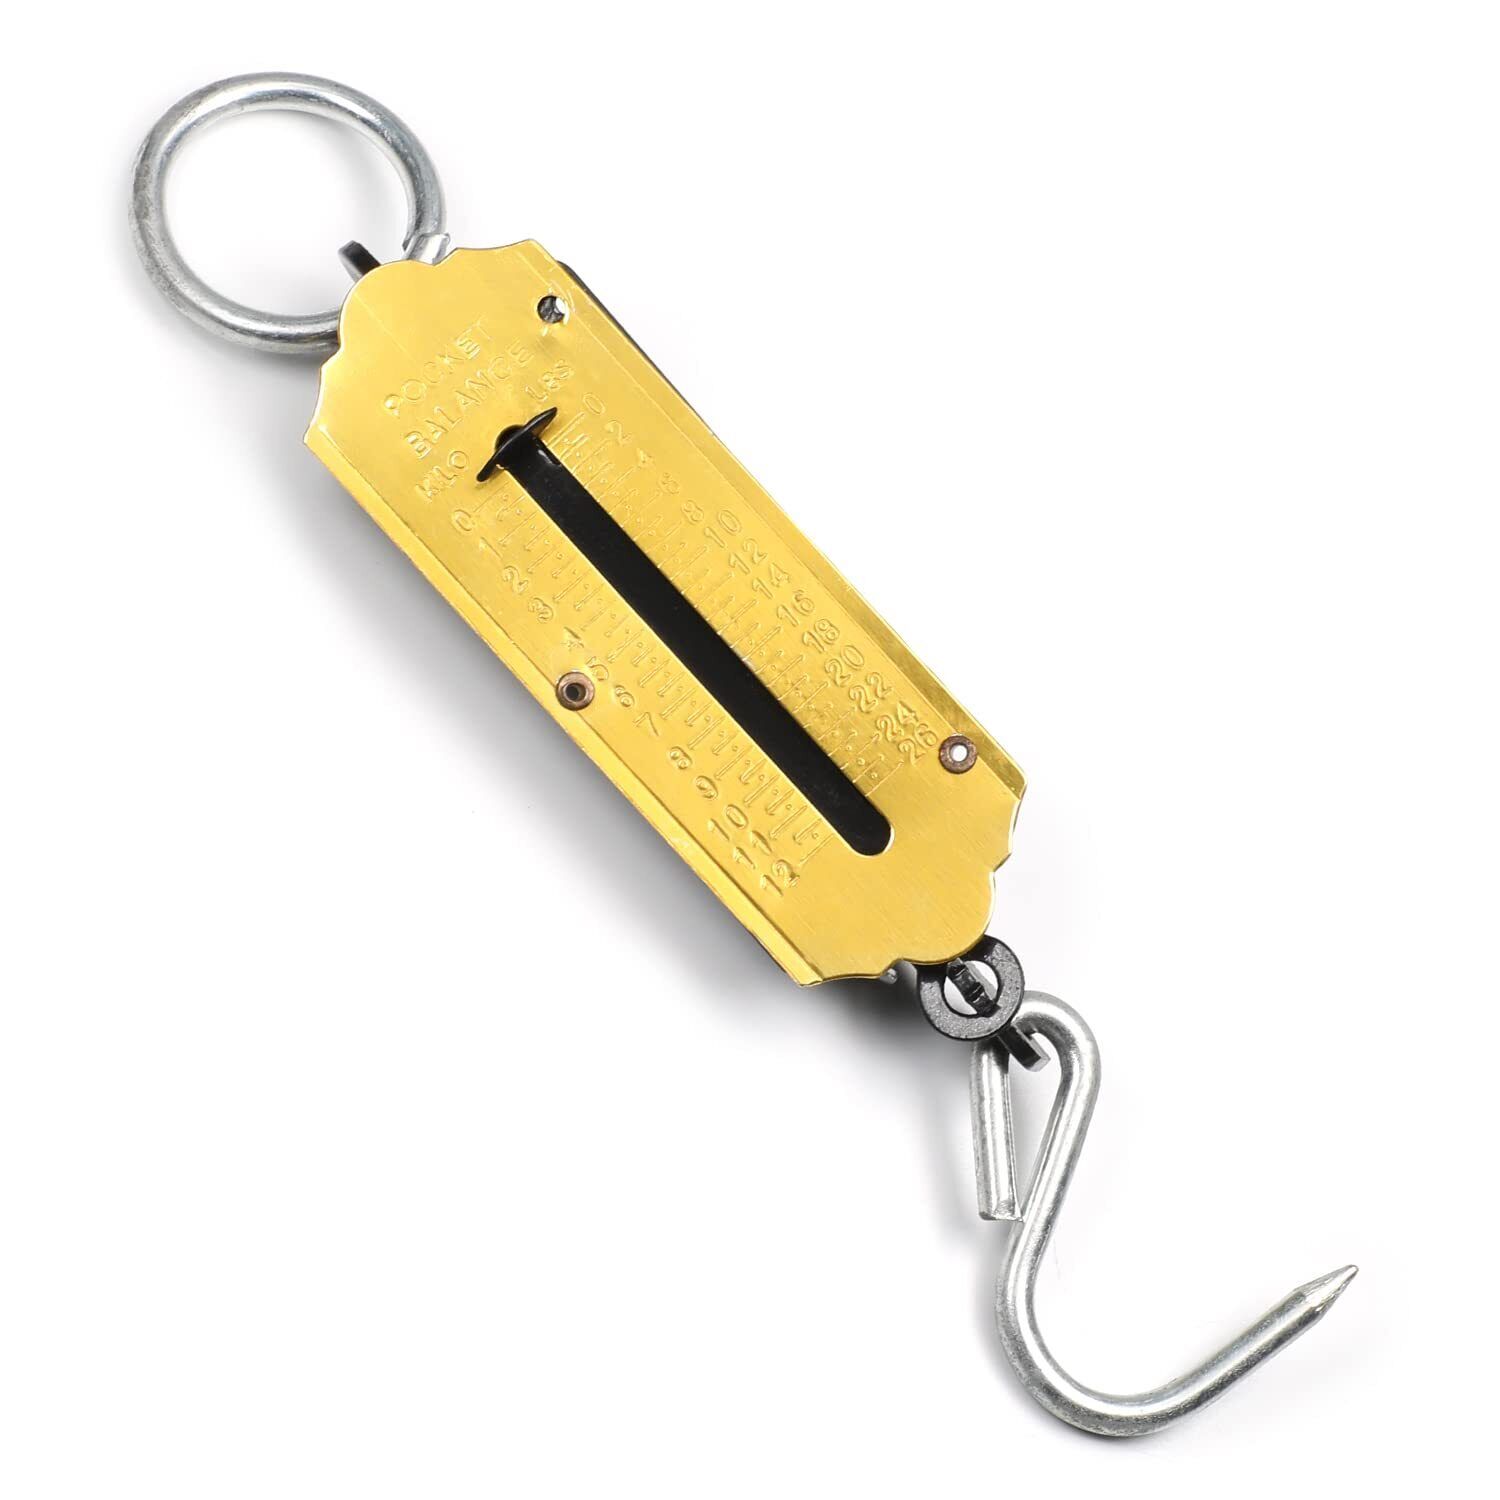 Spring Balance Hanging Hook Handheld Metal Weighing Force Scale Kilo & LBS 12KG